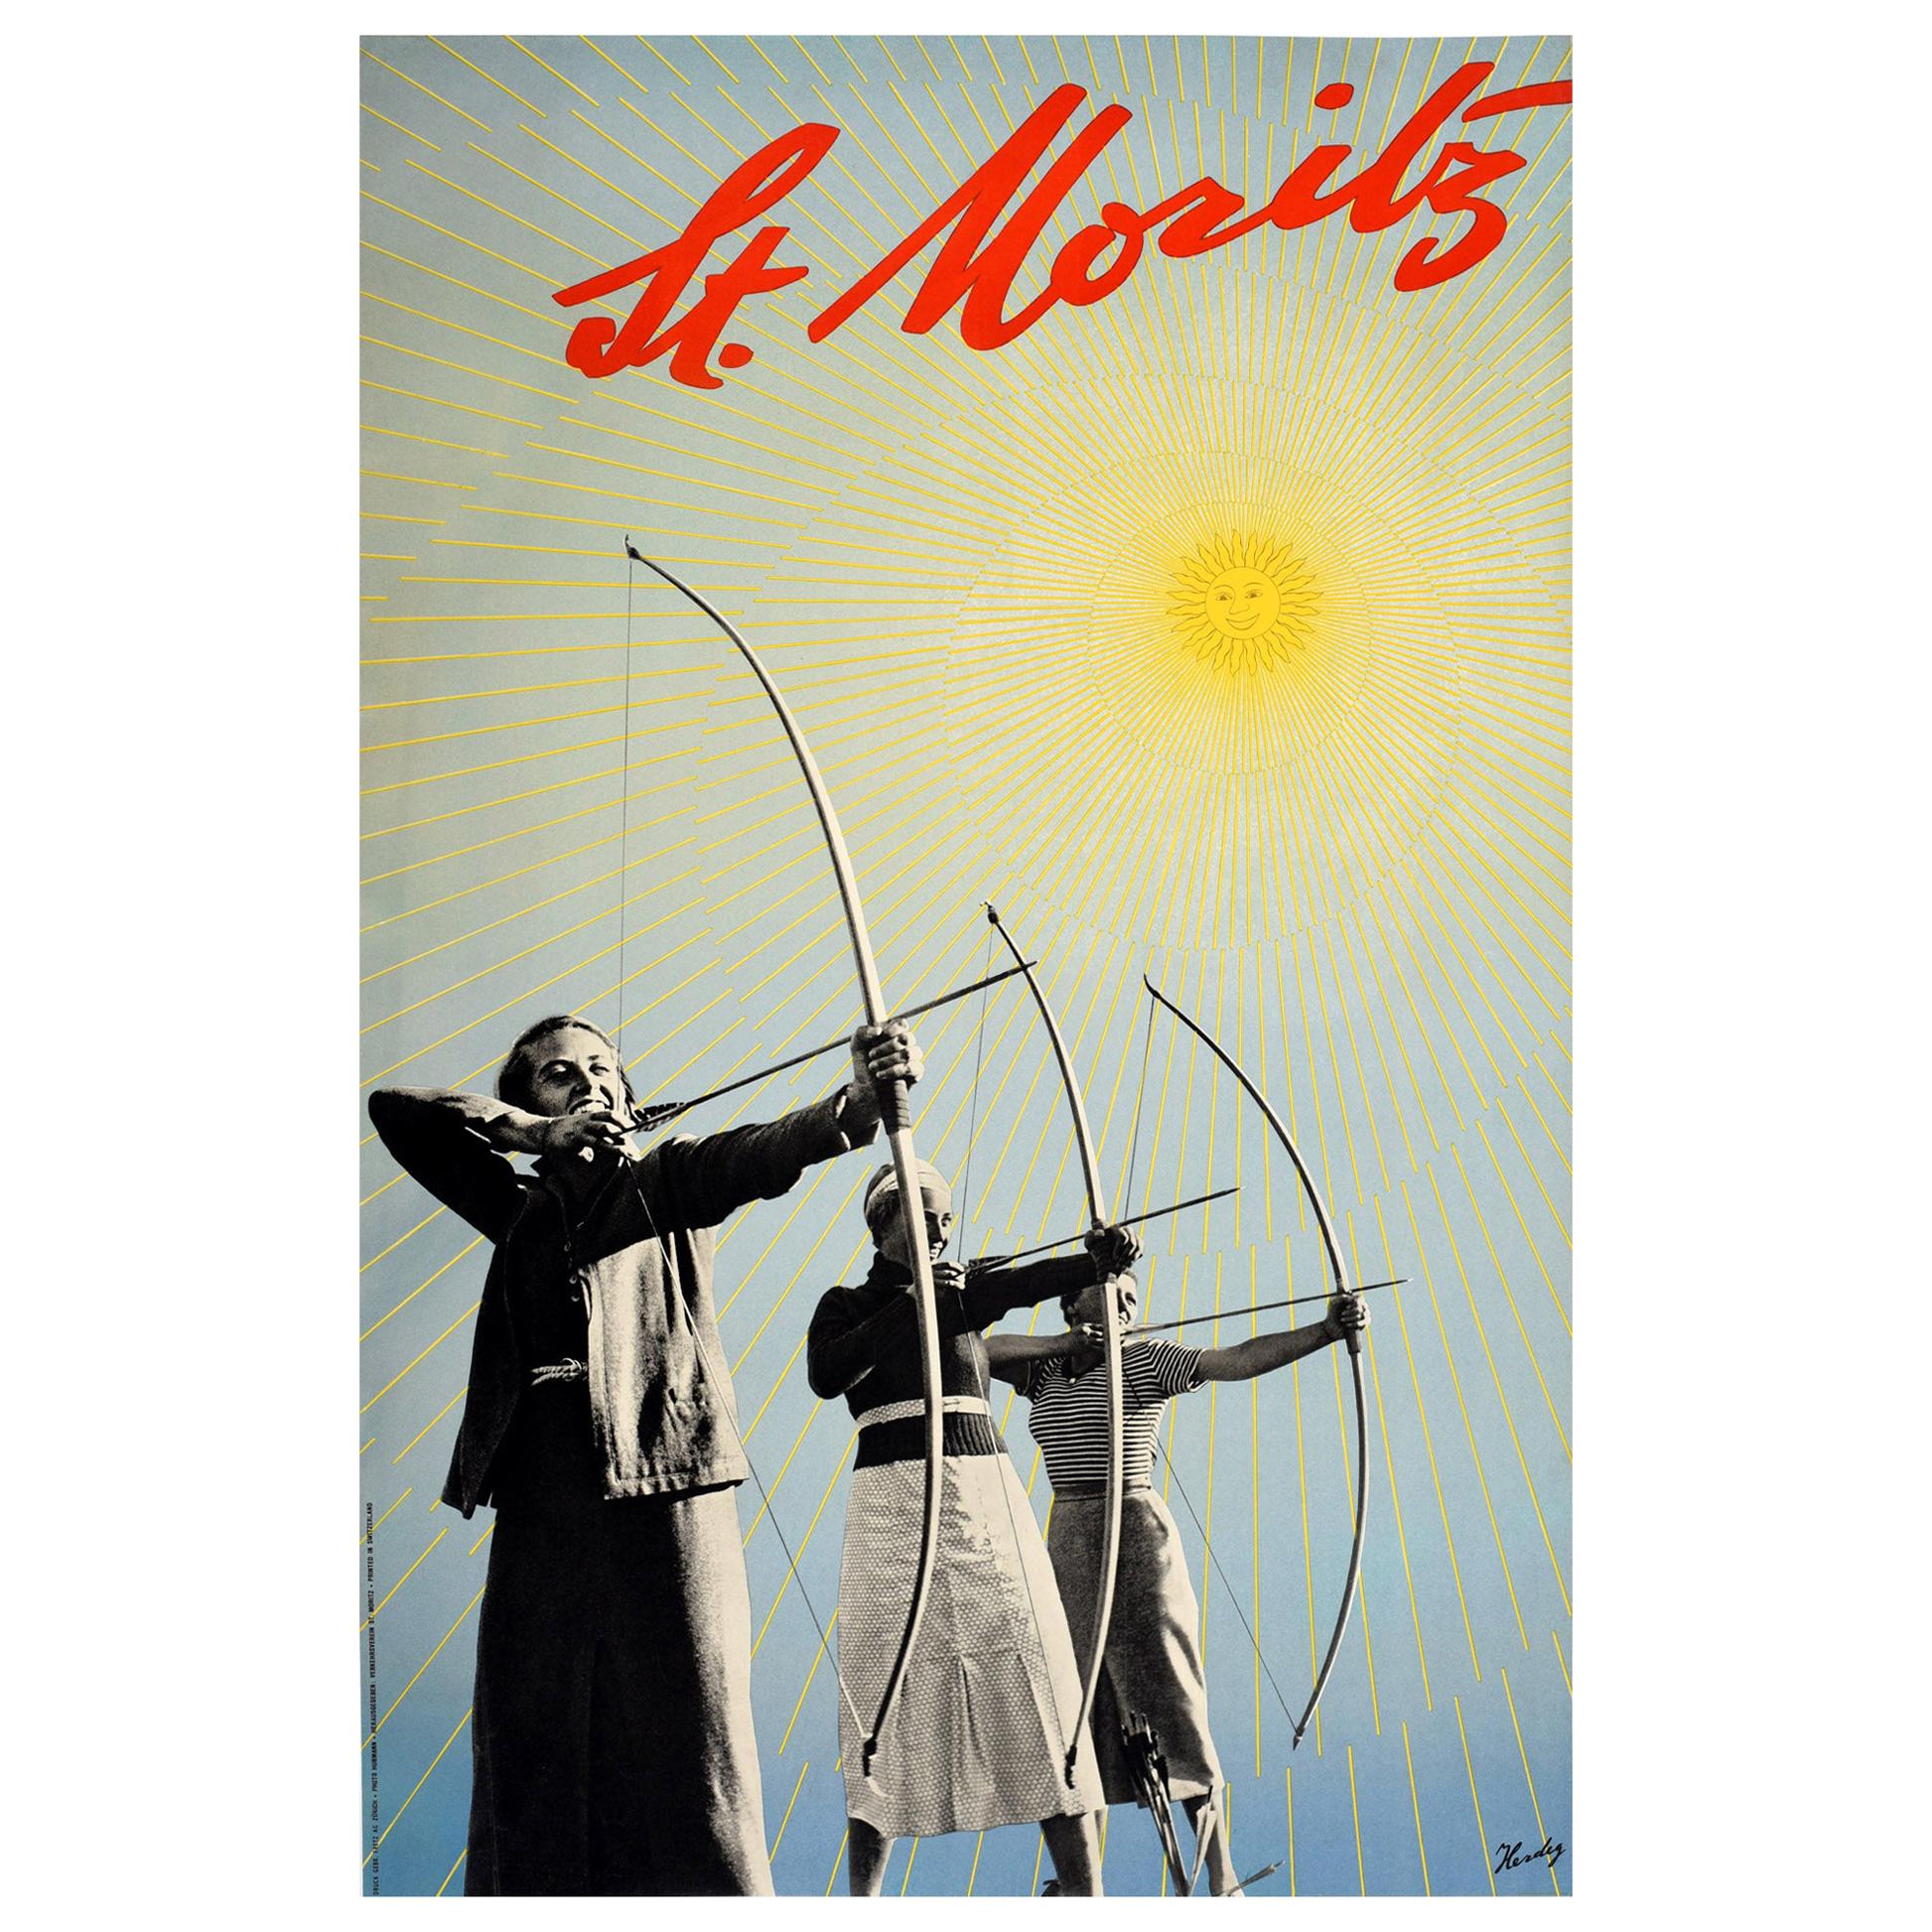 St Moritz Switzerland French Sun Ski Vintage Travel Advertisement Poster Print 